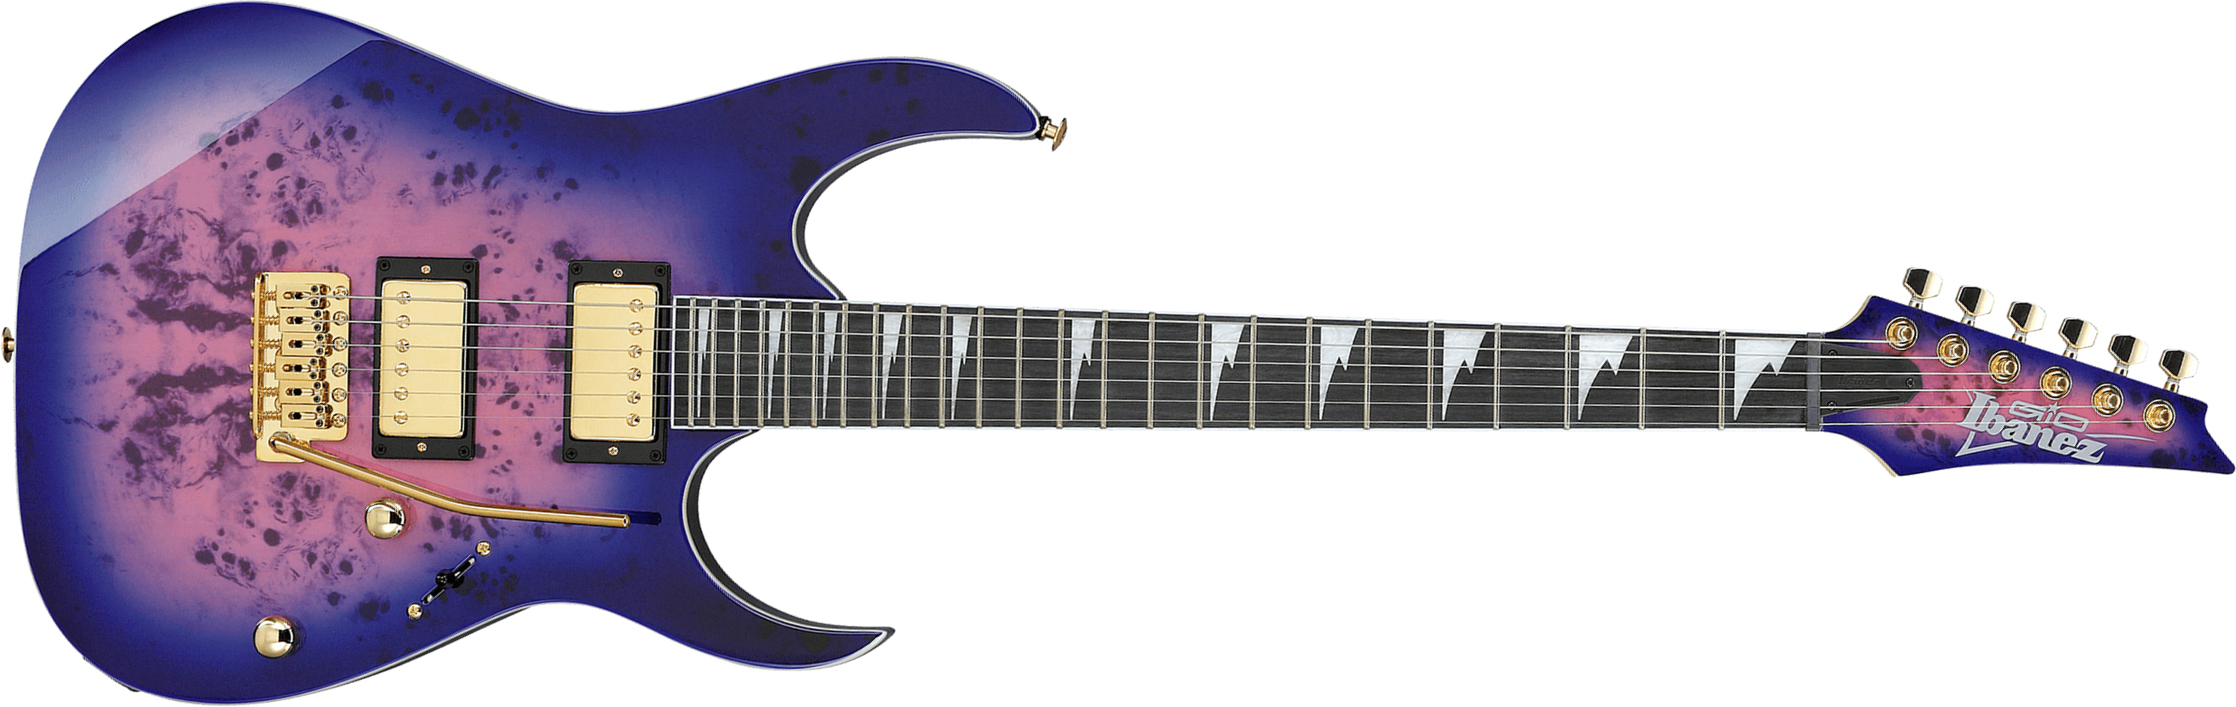 Ibanez Grg220pa Rlb Gio 2h Trem Pur - Royal Purple Burst - Elektrische gitaar in Str-vorm - Main picture